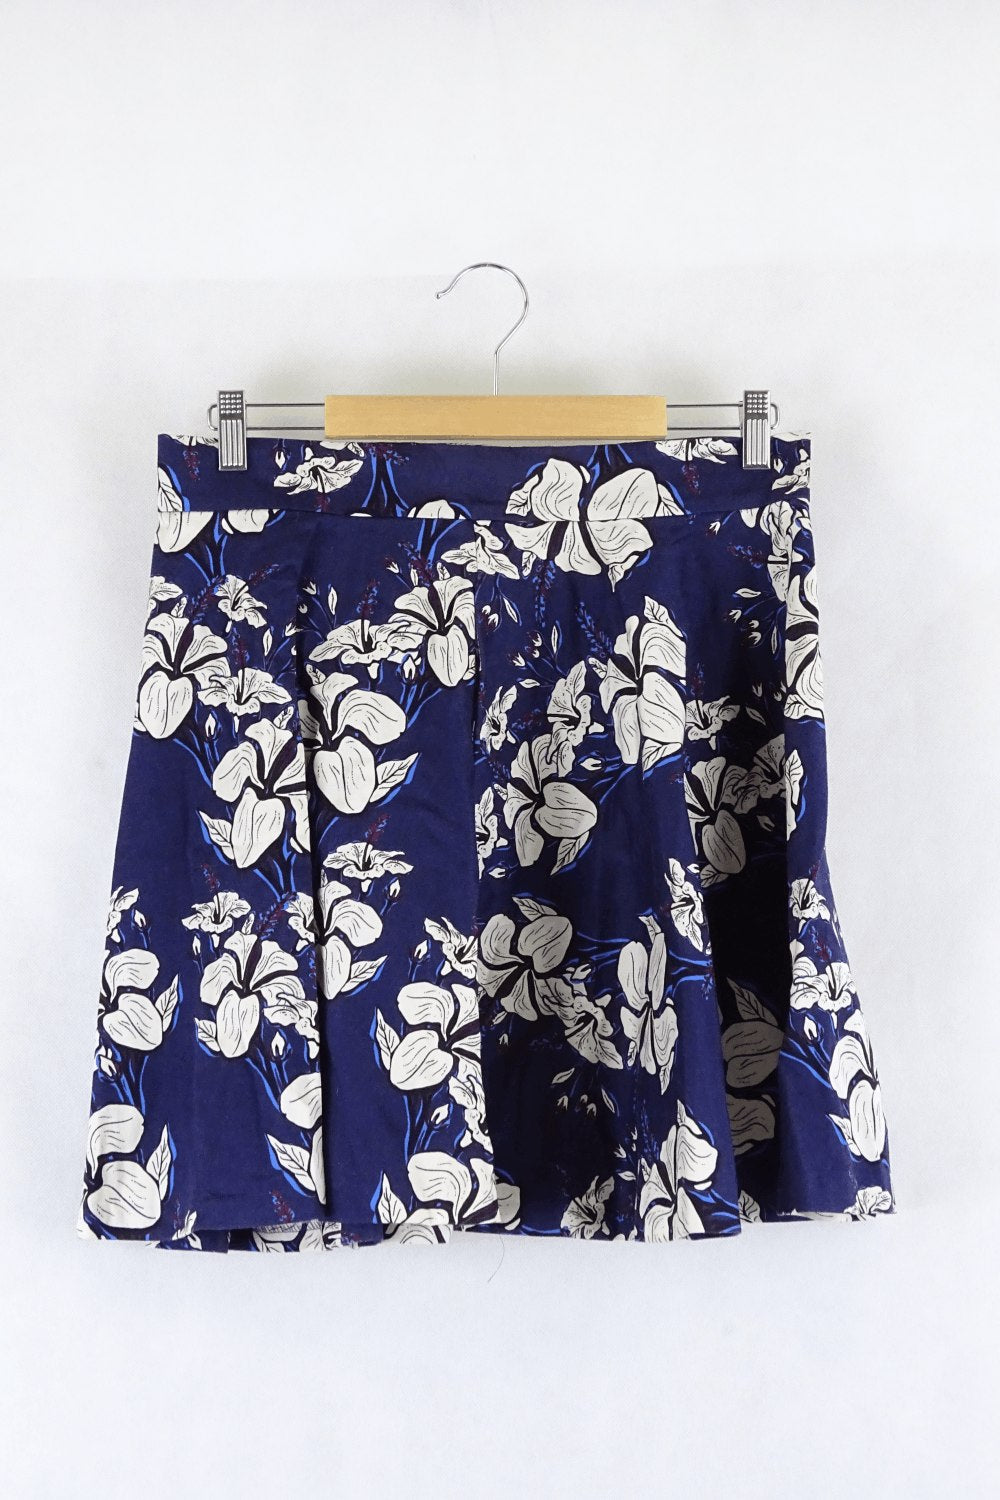 Zara Floral Navy Skirt L